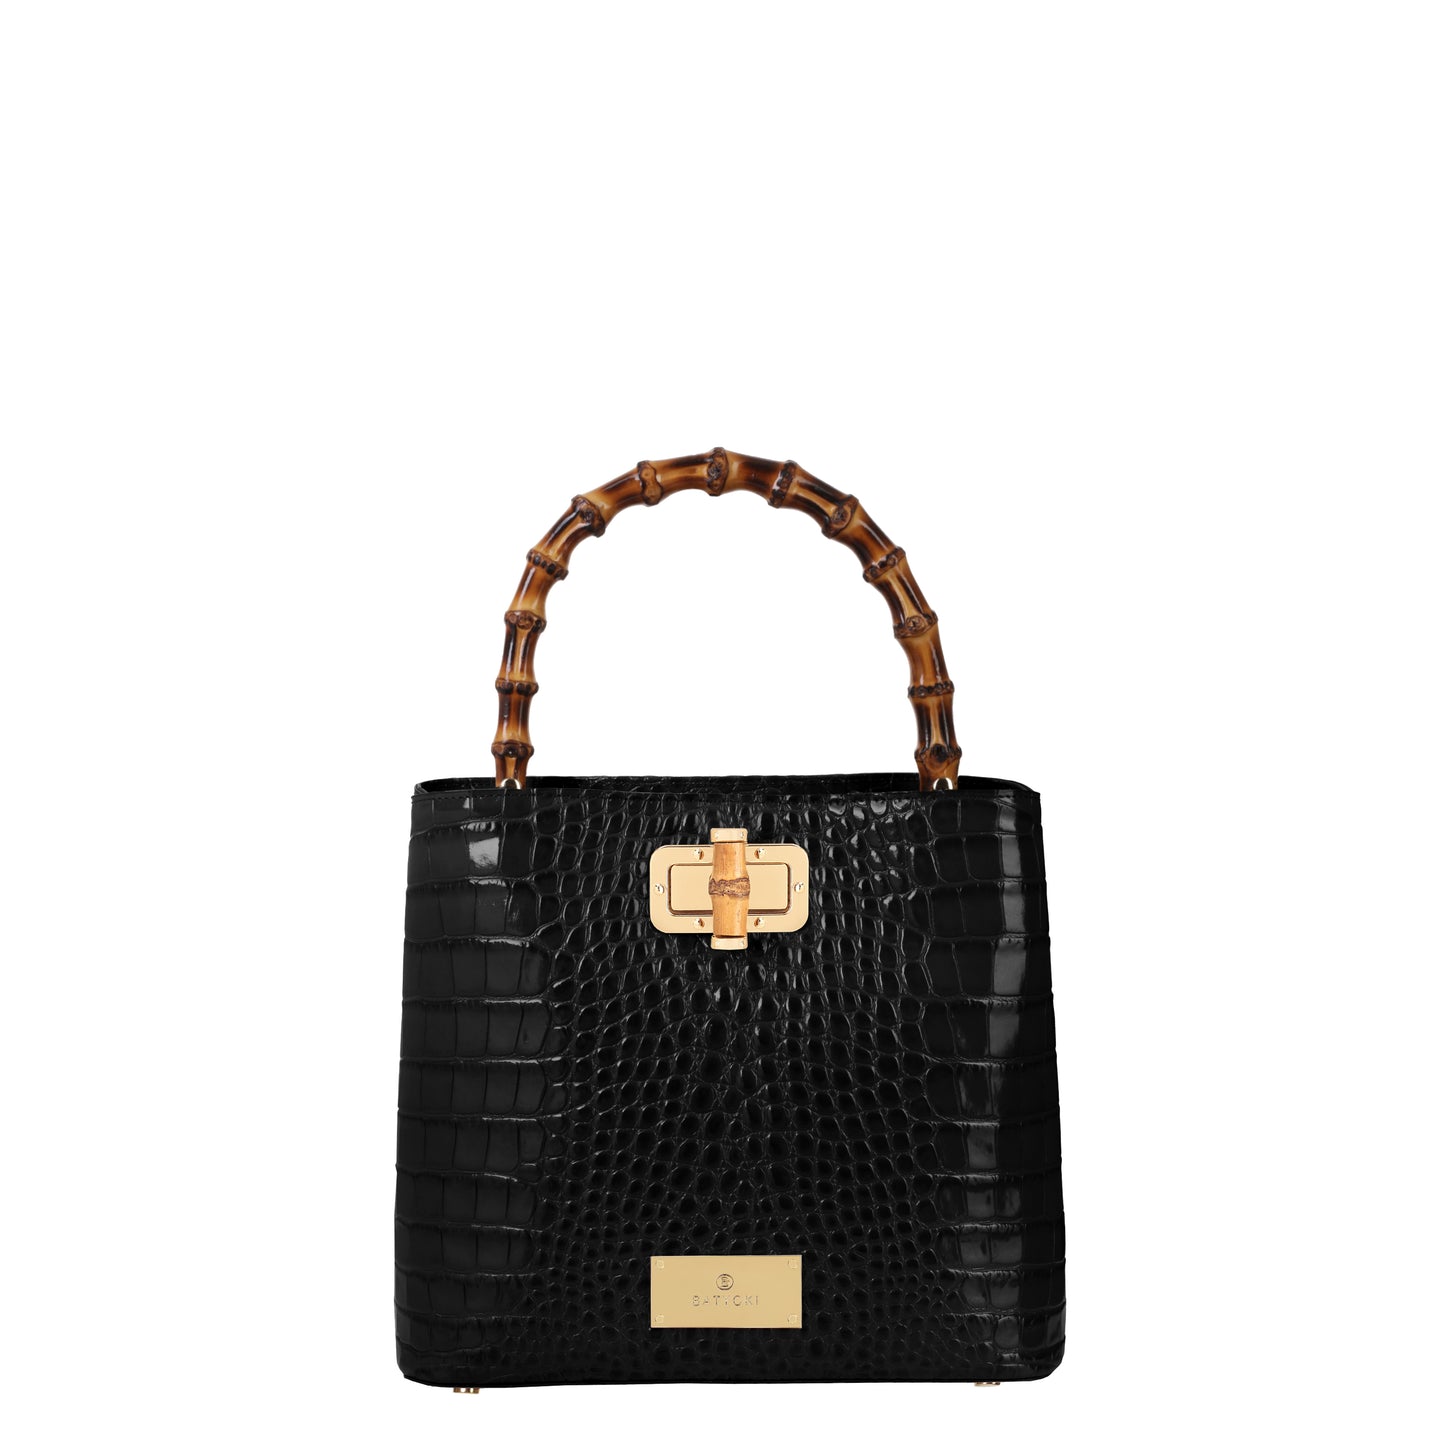 STELLA croco black women's leather handbag